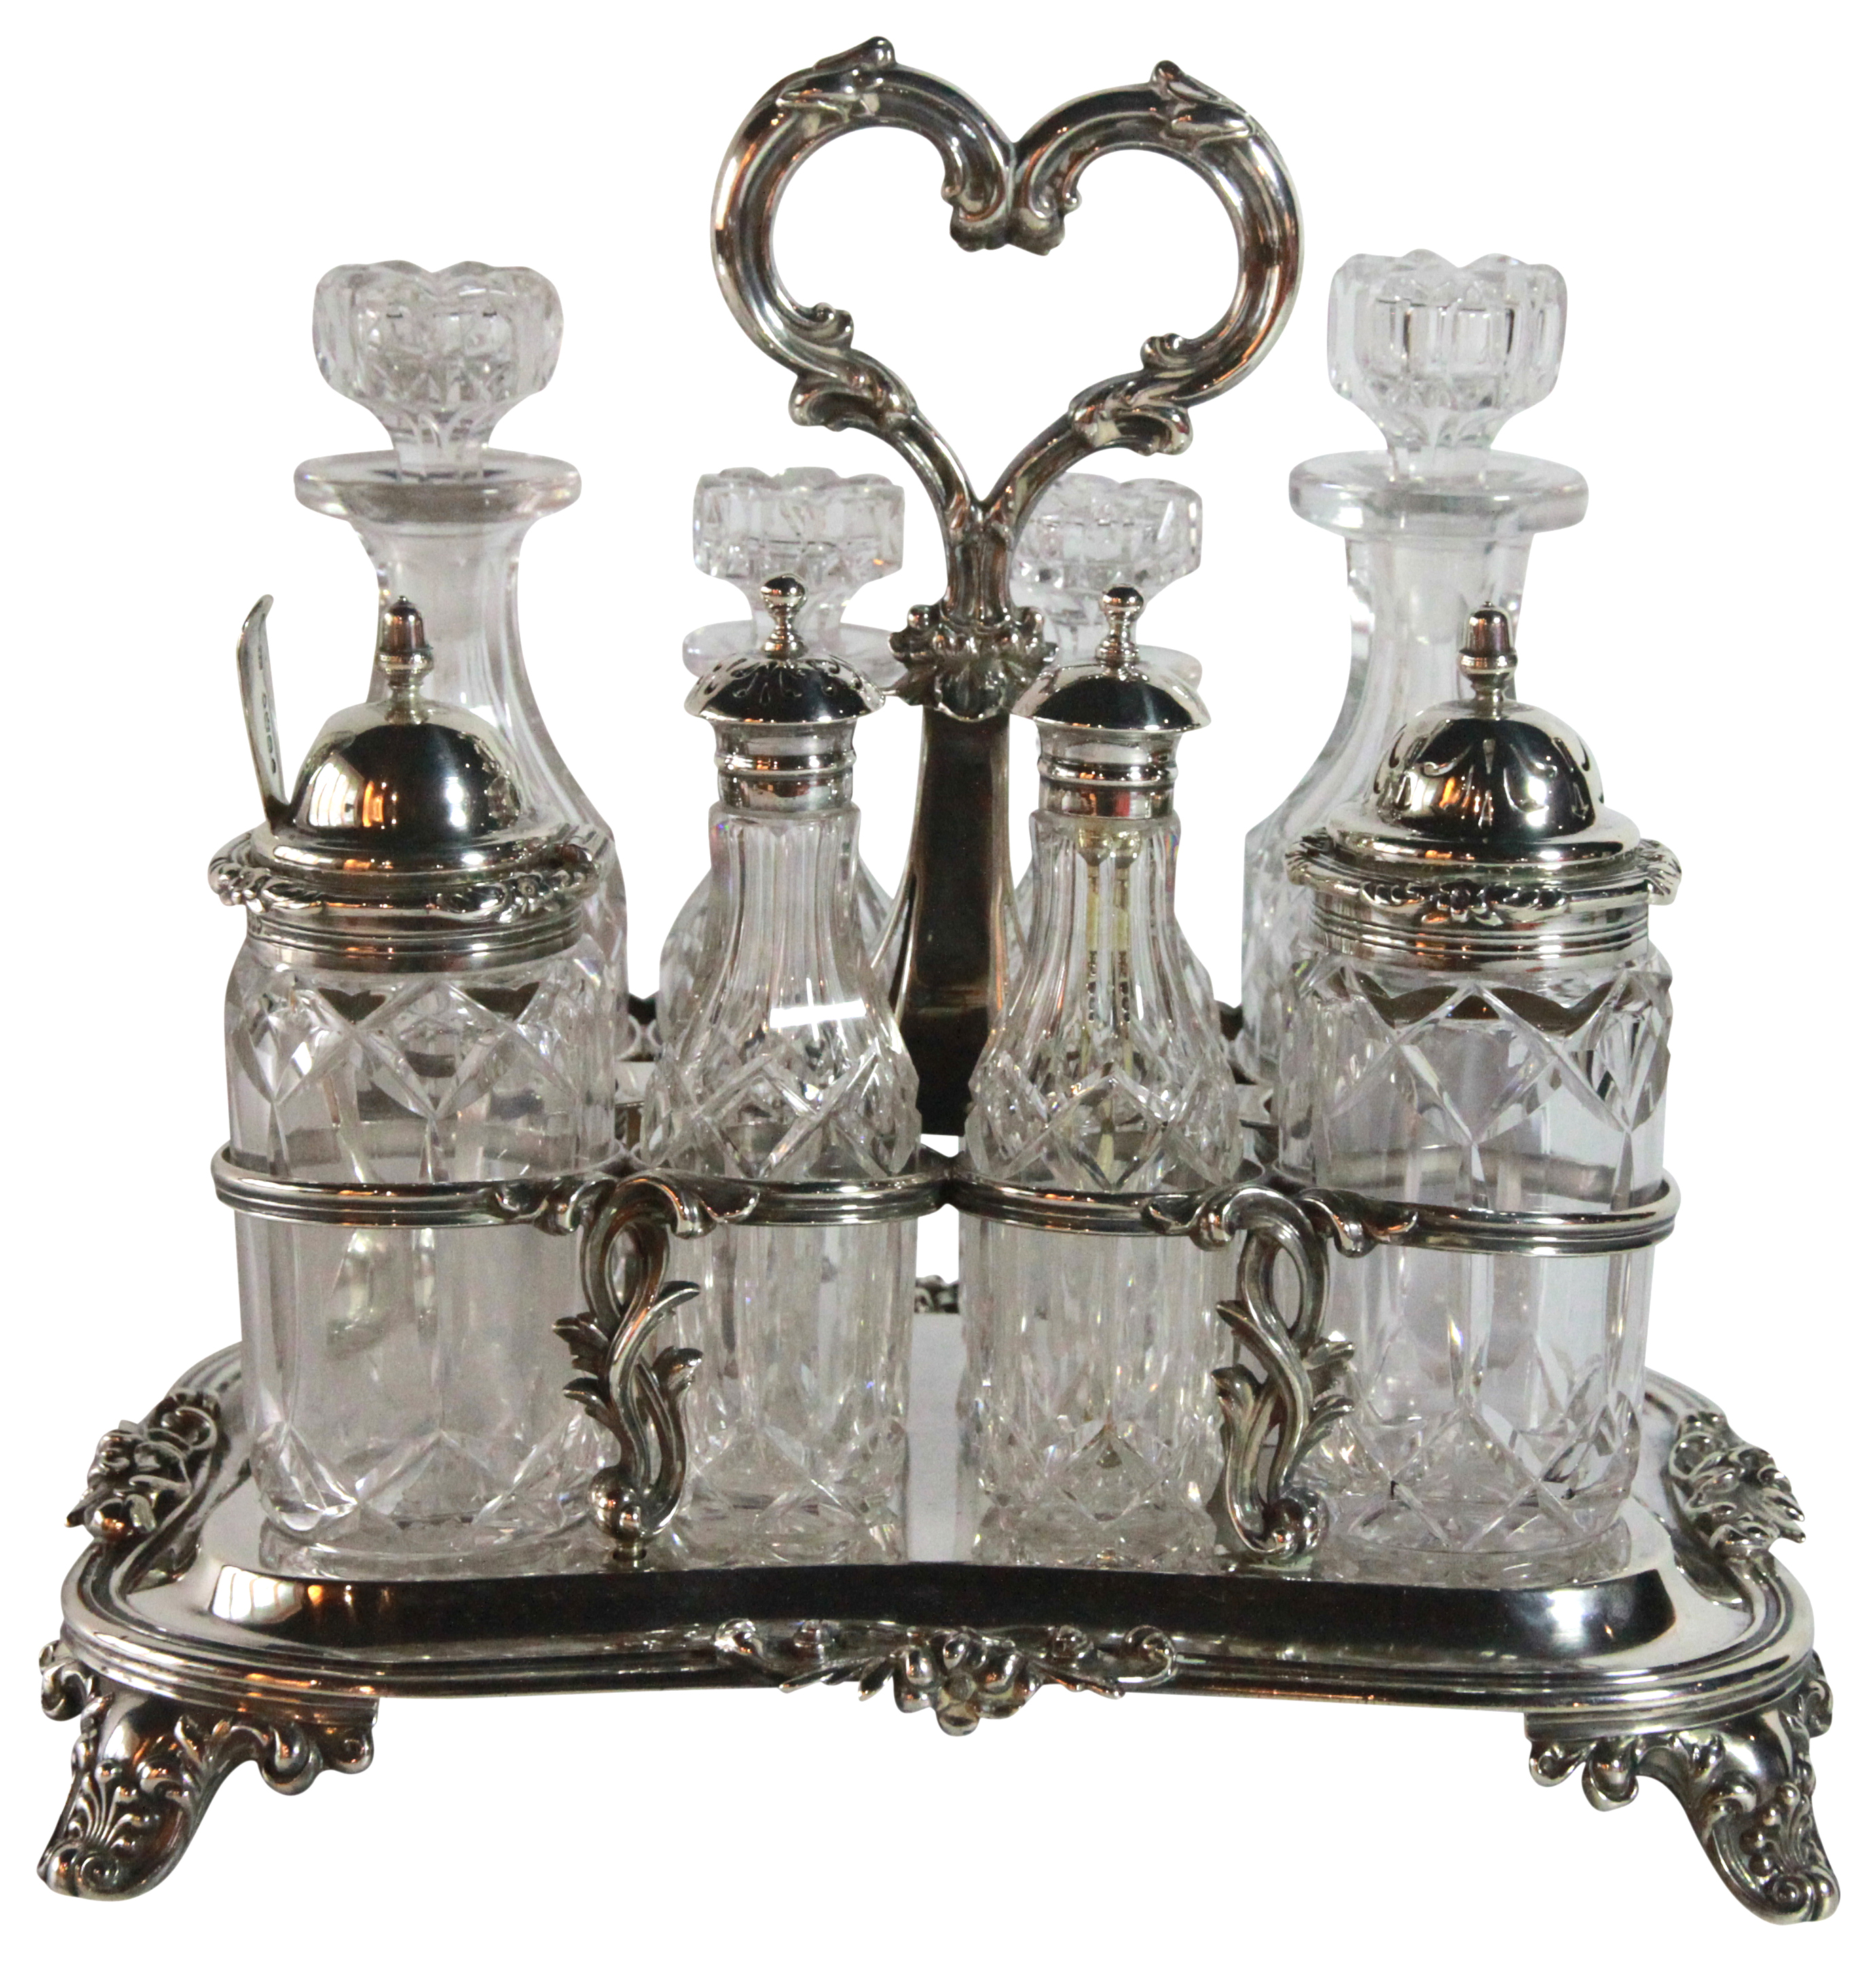 A Victorian silver & glass cruet set. 8 cruets upon a silver base - Rawlings & Summers 1839, (L: